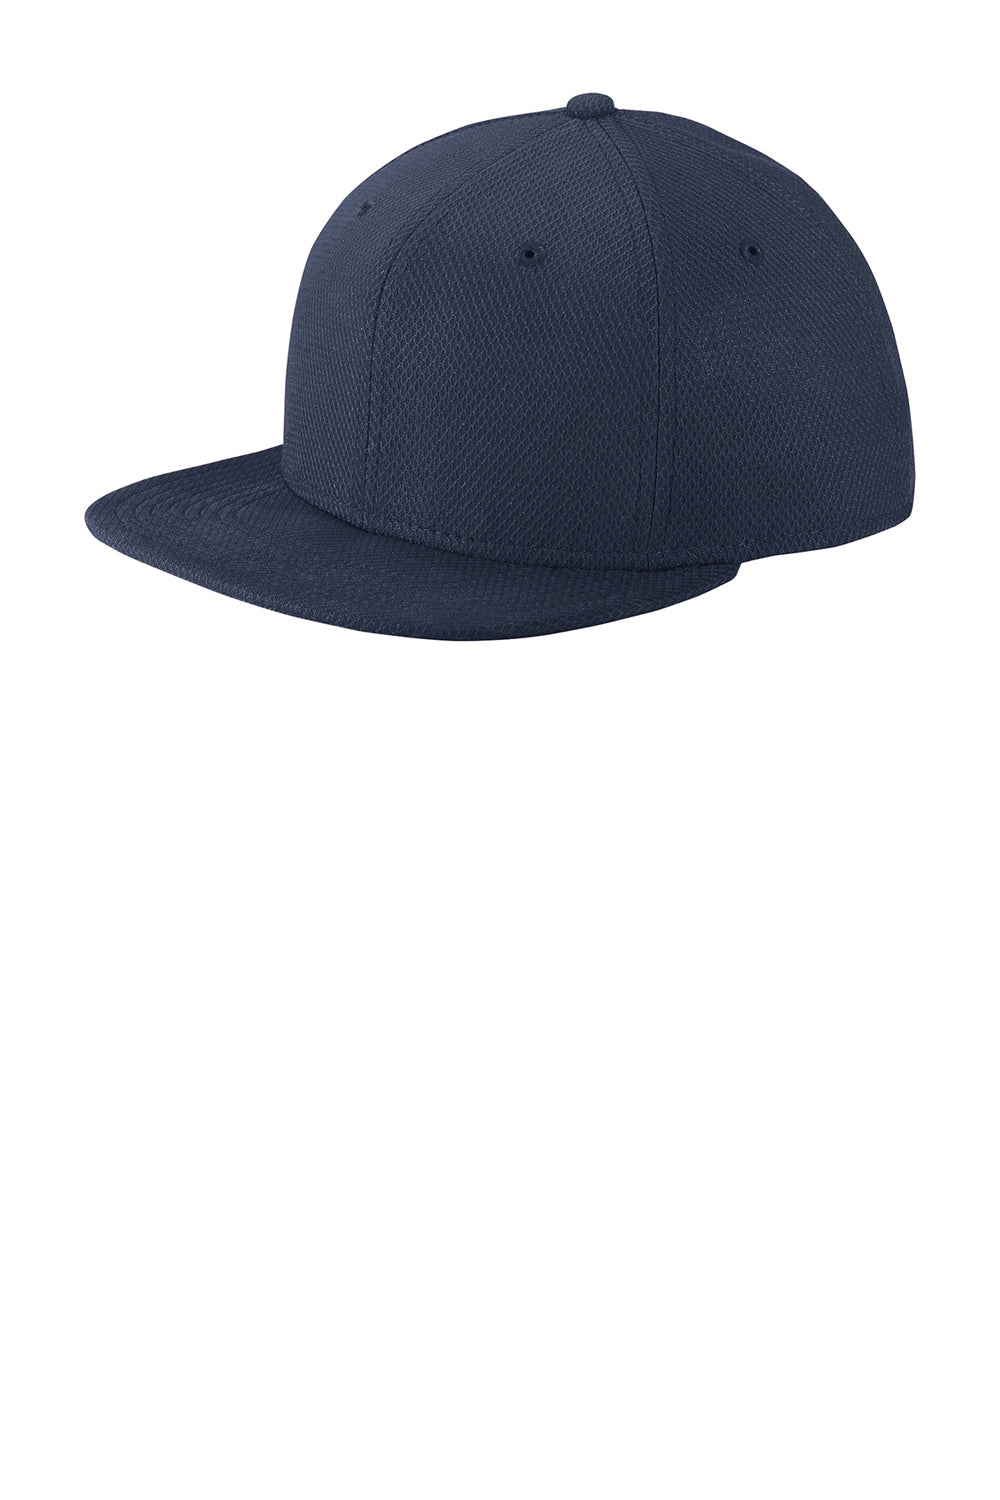 New Era NE404 Mens Navy Blue Moisture Wicking Adjustable Hat